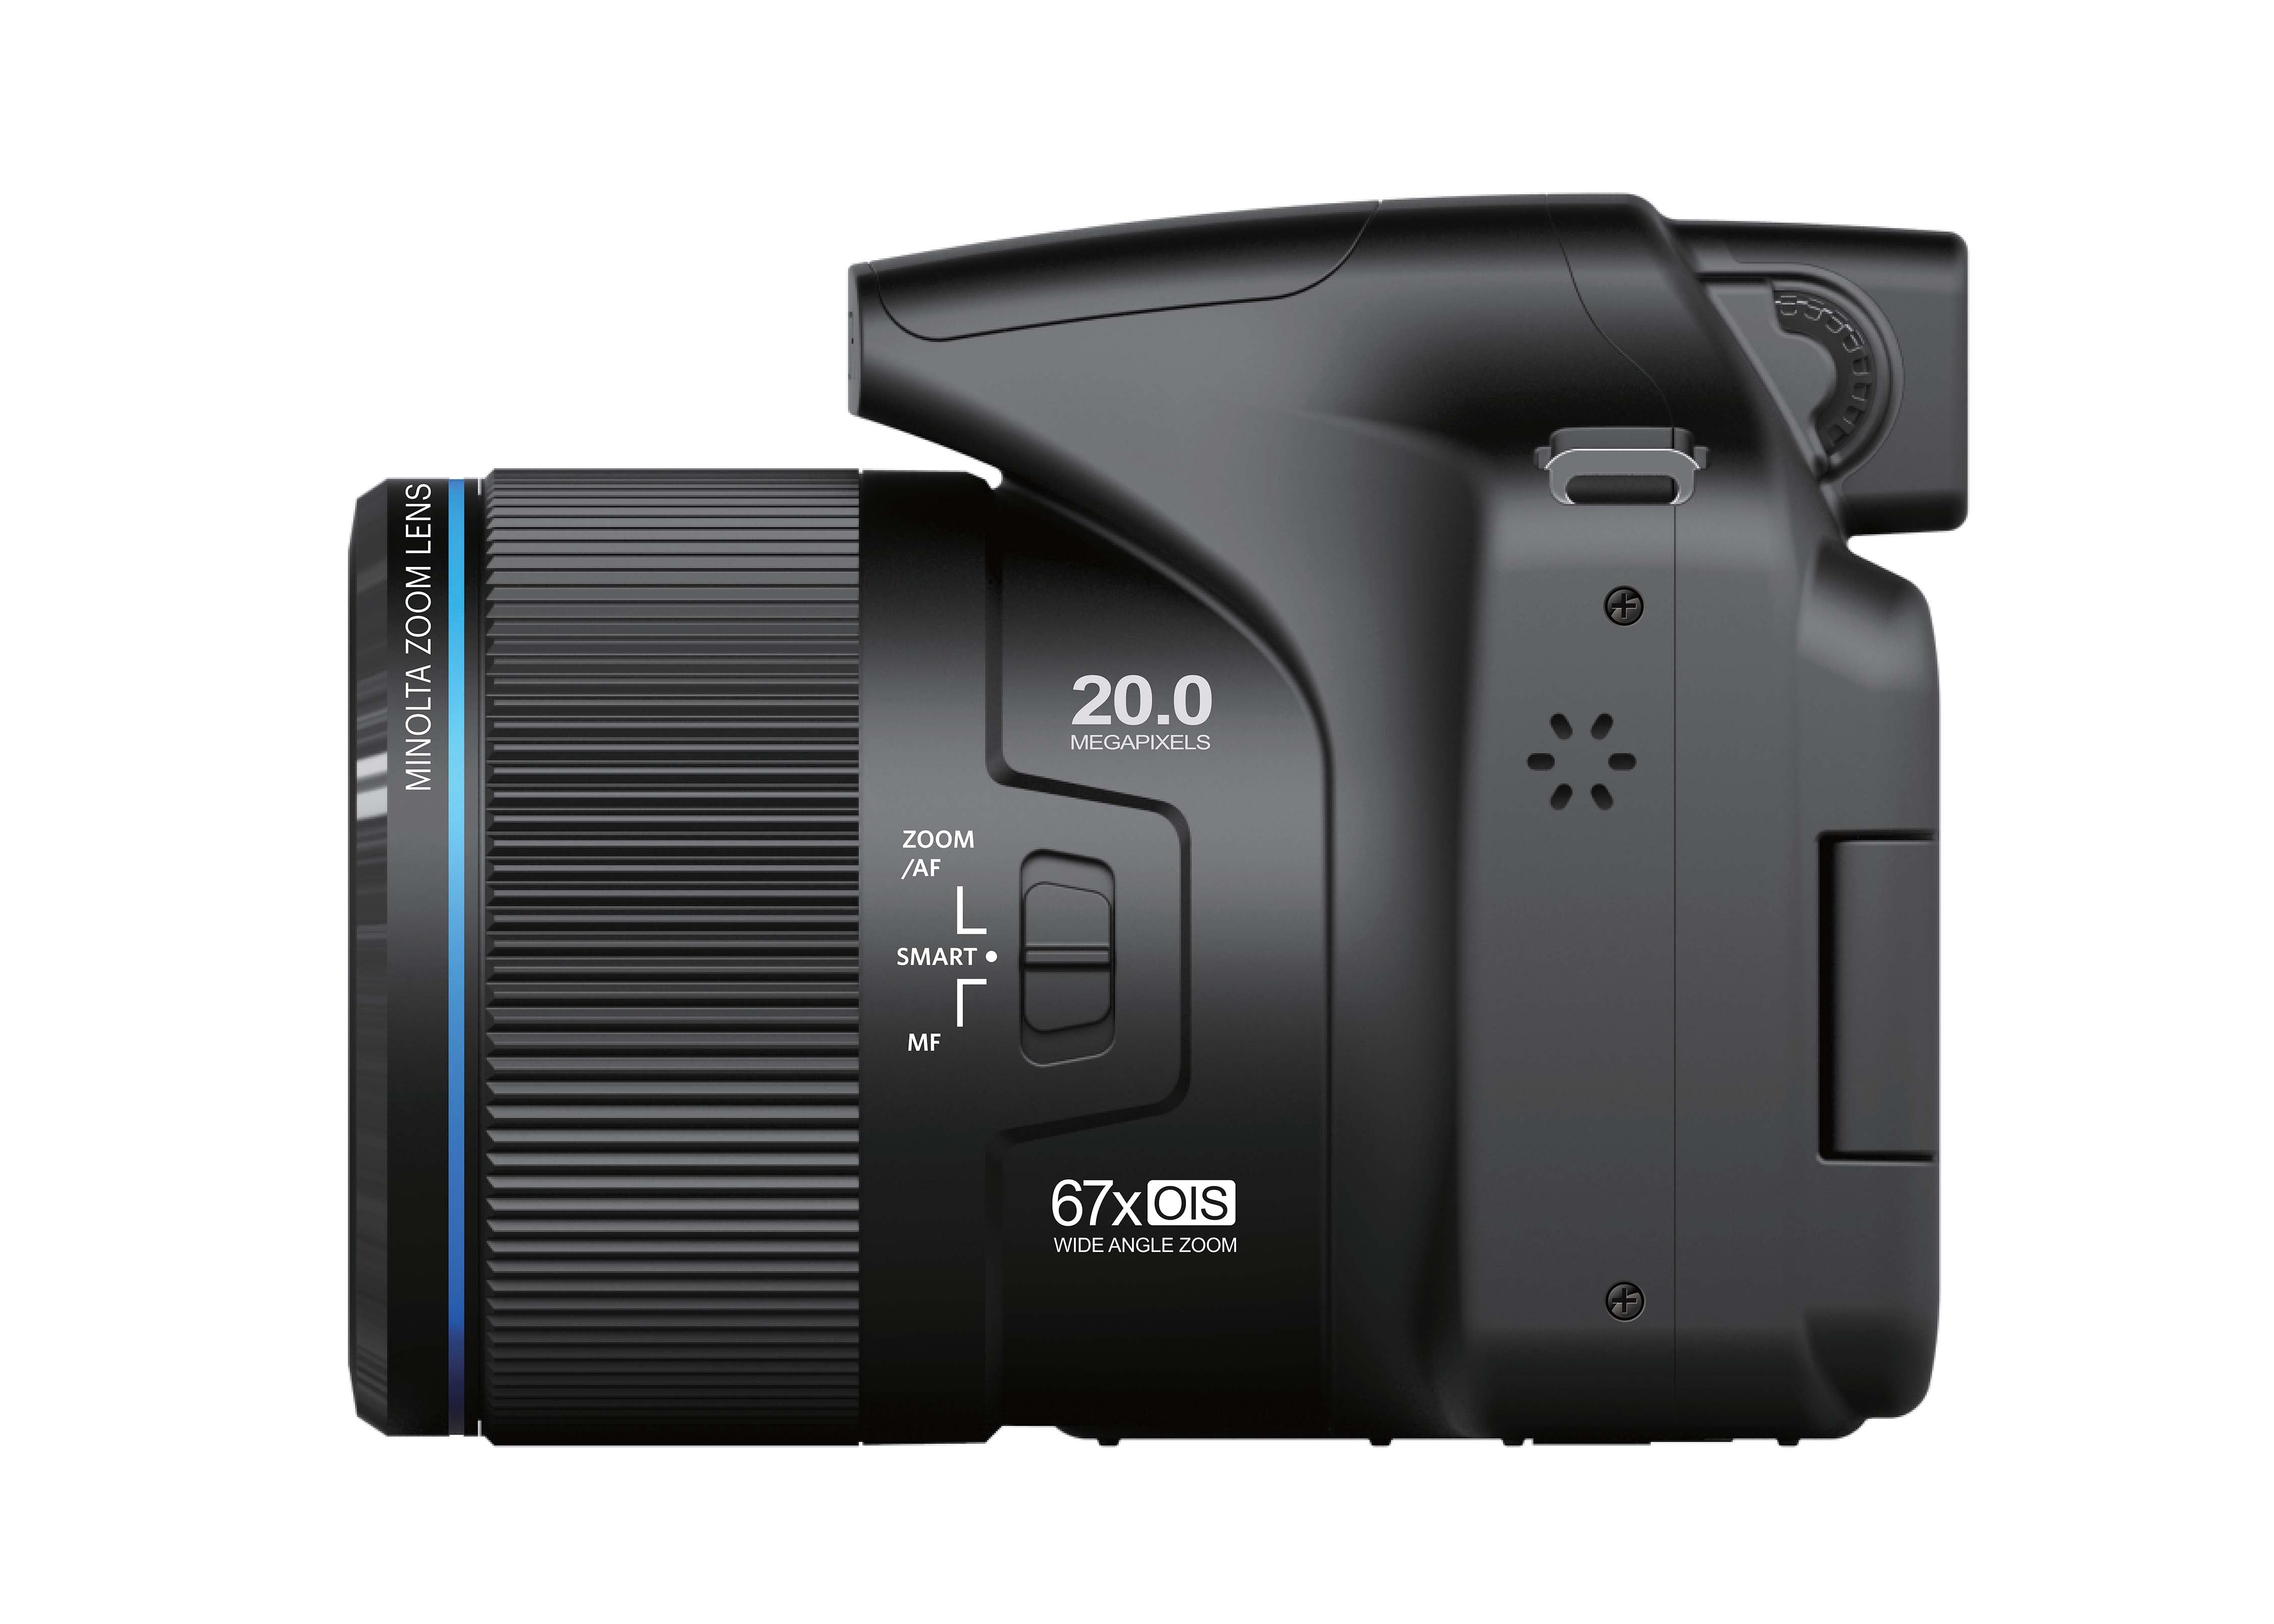 MN67Z 20MP / 1080p HD 67X Optical Zoom Wi-Fi Bridge Camera